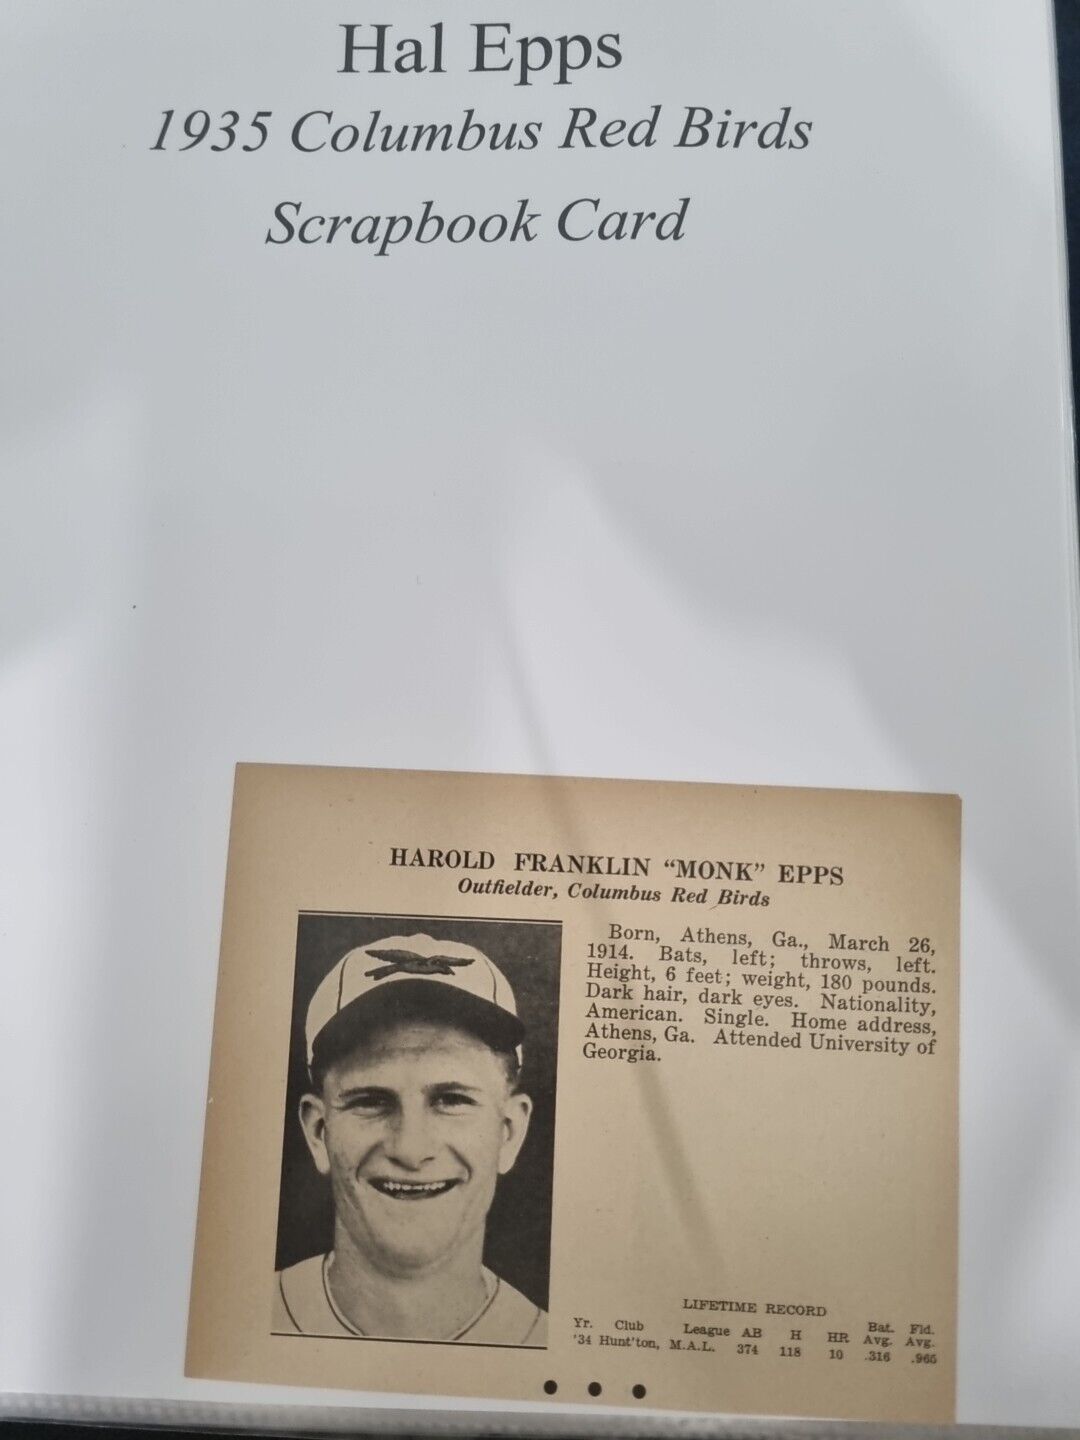 1935 Hal Epps Scrapbook Card - Columbus Red Birds - Vintage Baseball Memorabilia